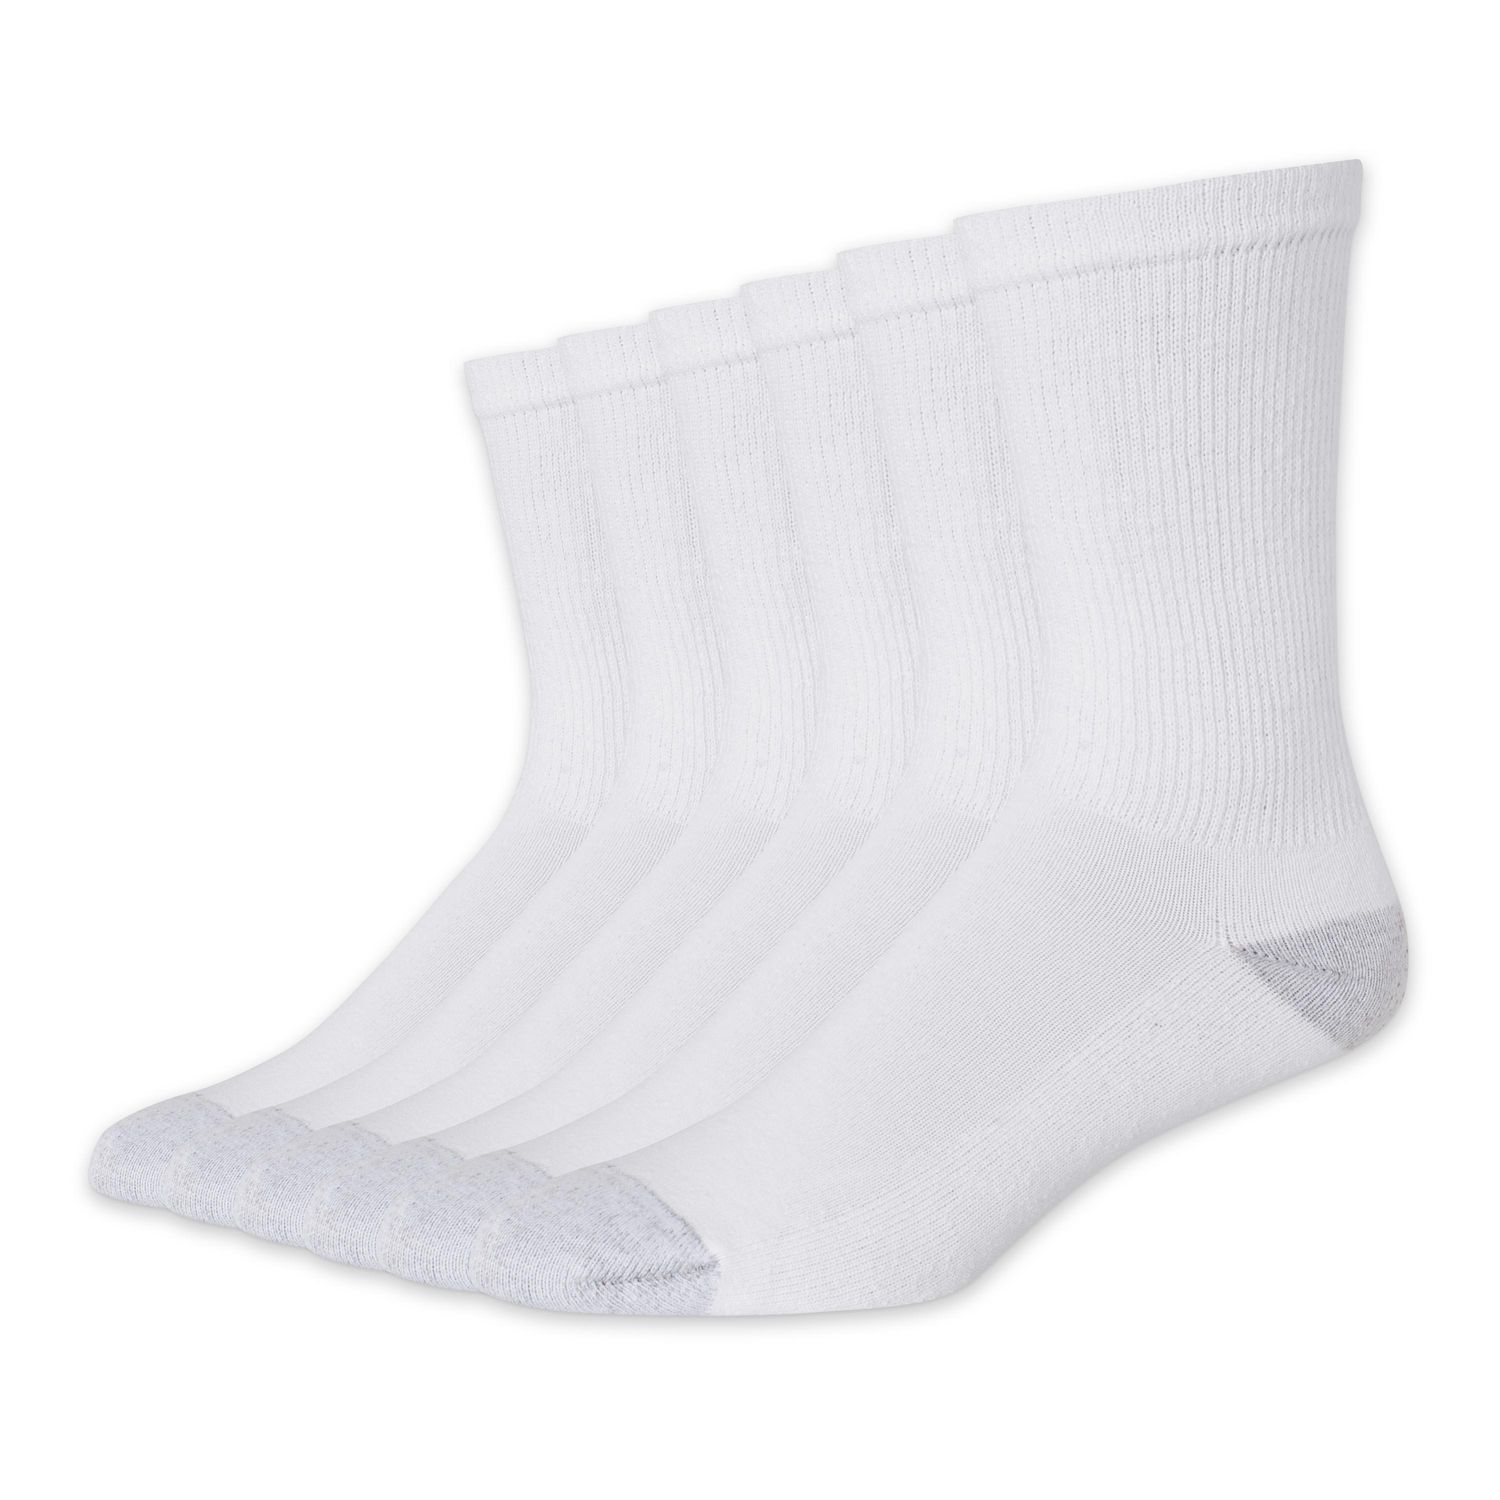 Hanes Men's 6 Pack Sport Cuts Crew Cushion Sock, Size 6-12 